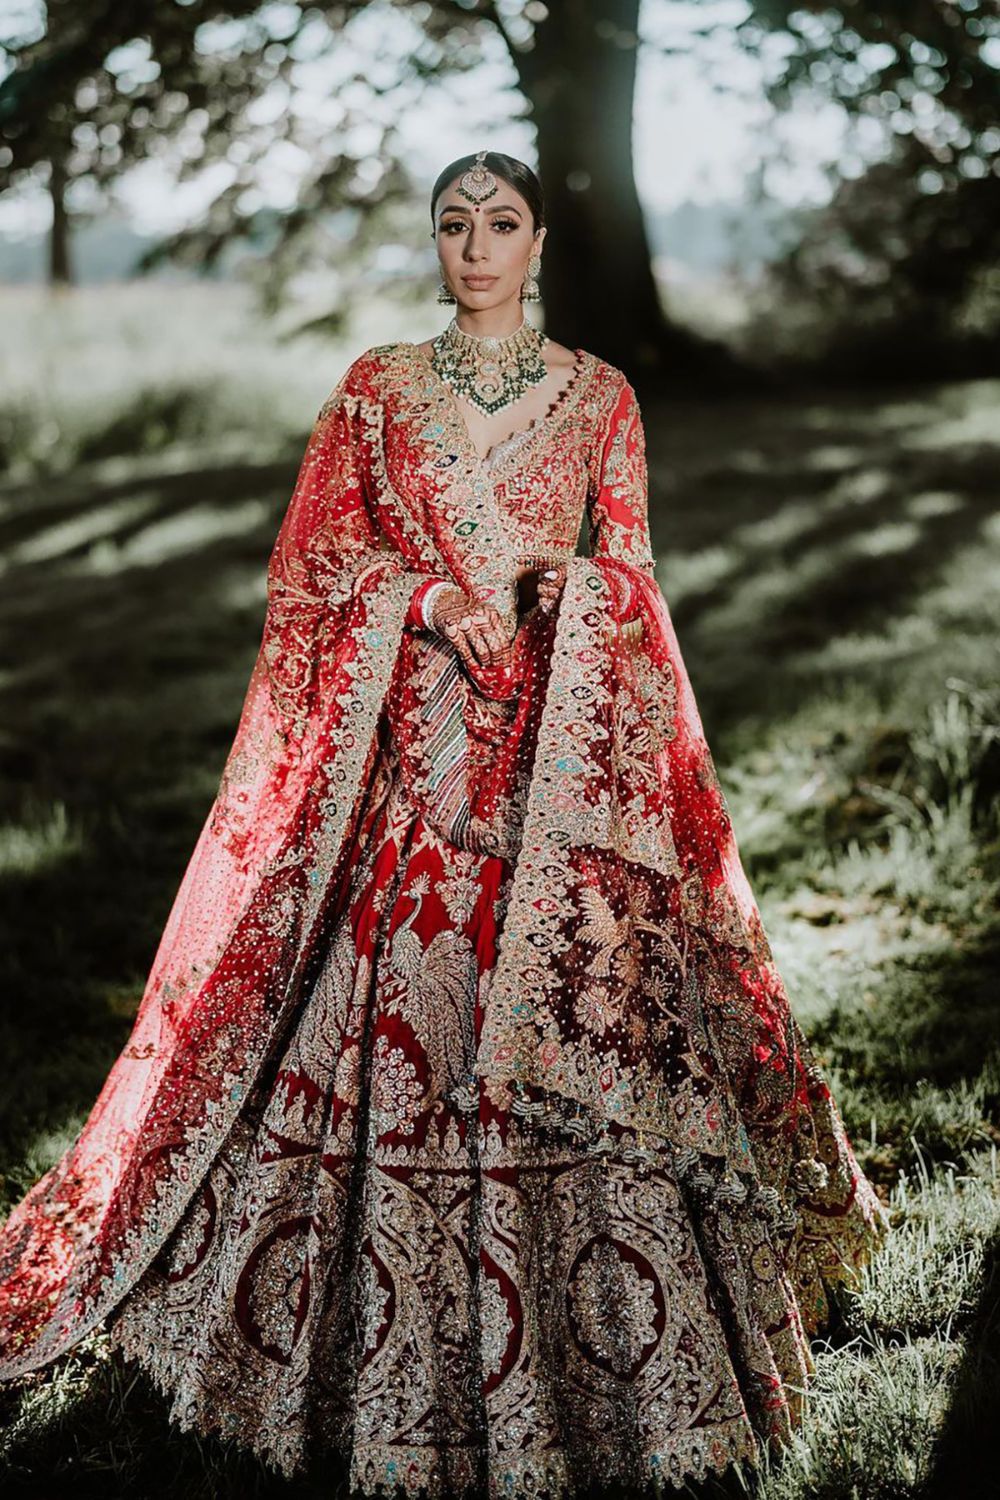 Seema Sarees - Red and Gold Bridal Indian/Pakistani/Asian Wedding Dress |  eBay